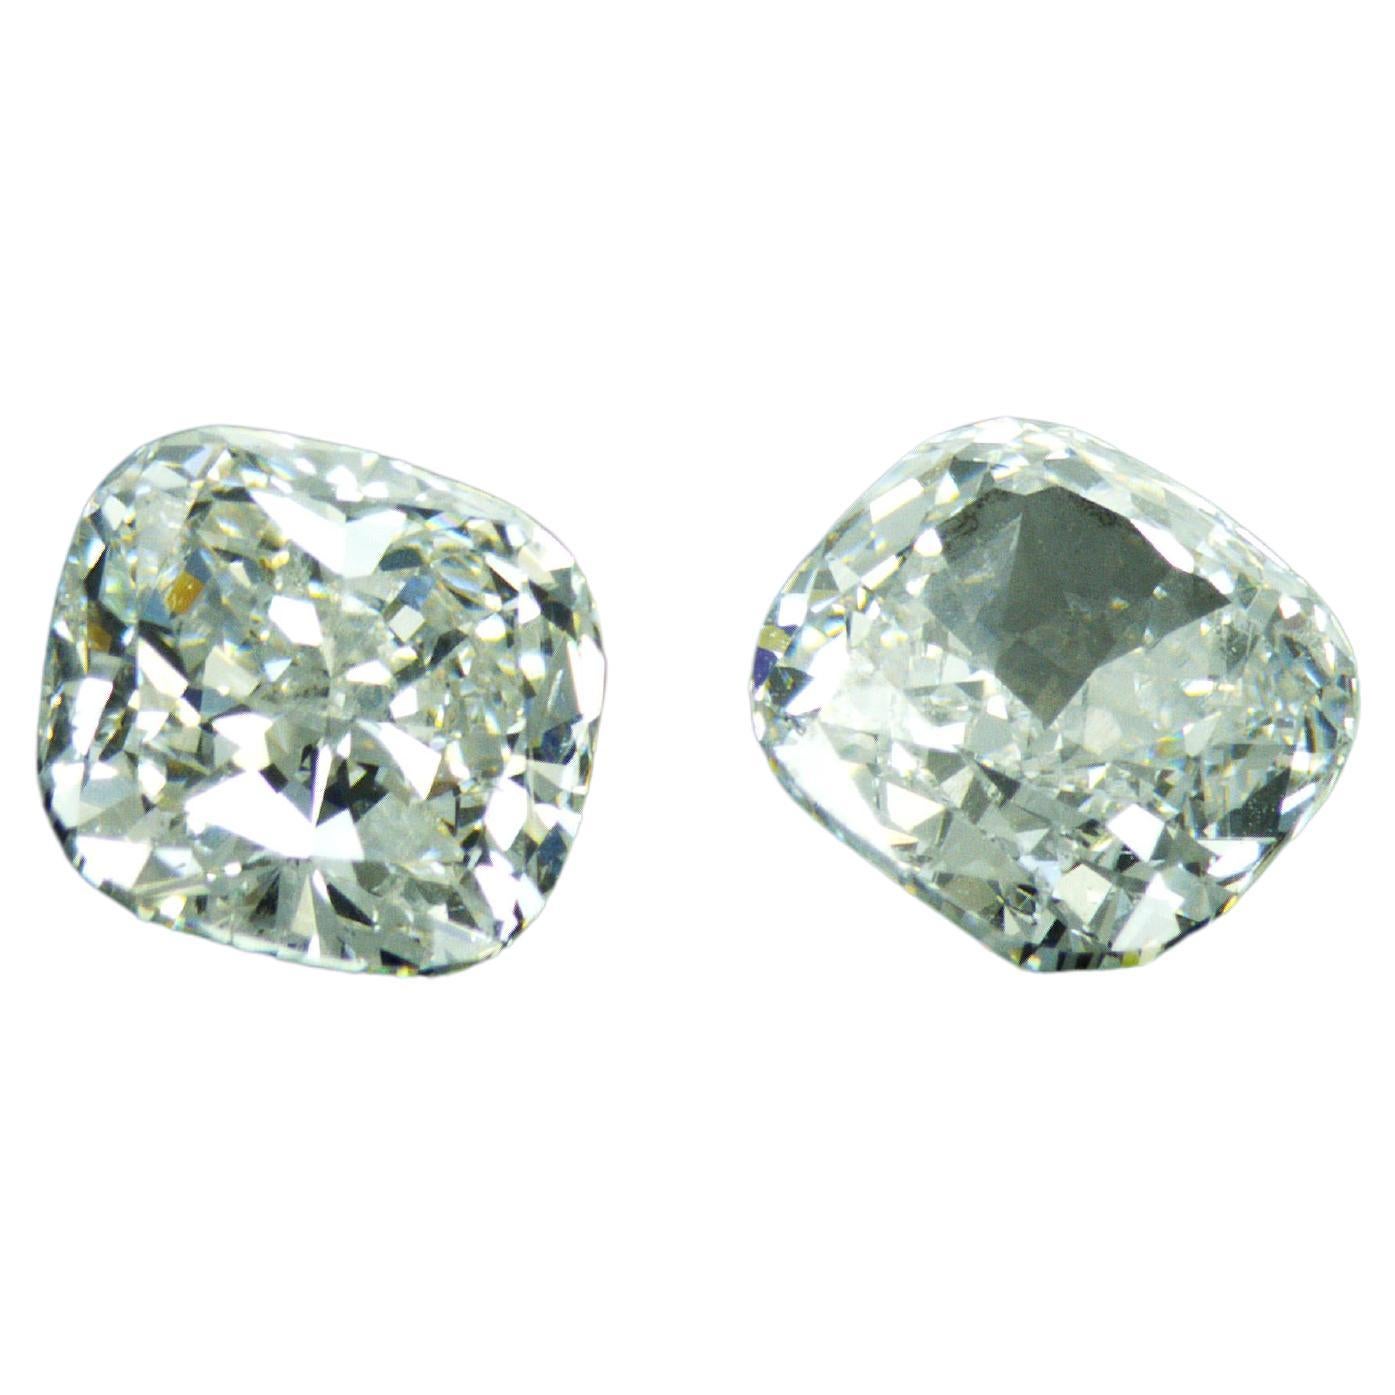 HRDAntwerp certified 1.01 and 1.03 carat Cushion Shape Pair of Natural Diamond